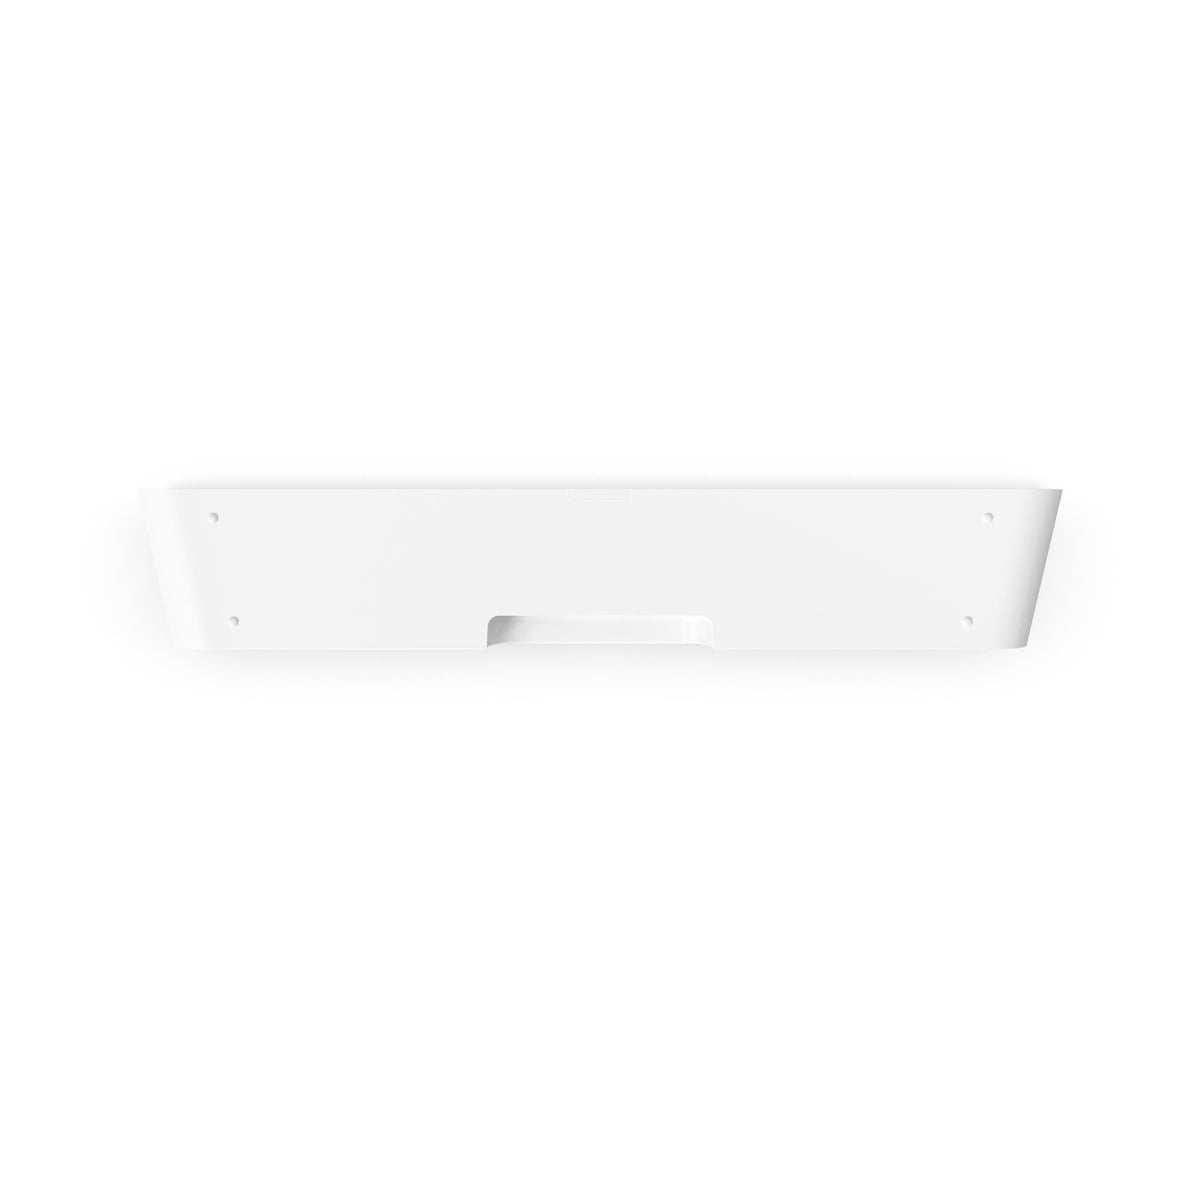 Sonos Ray Compact Smart Soundbar - White | RAYG1UK1 (7515493892284)